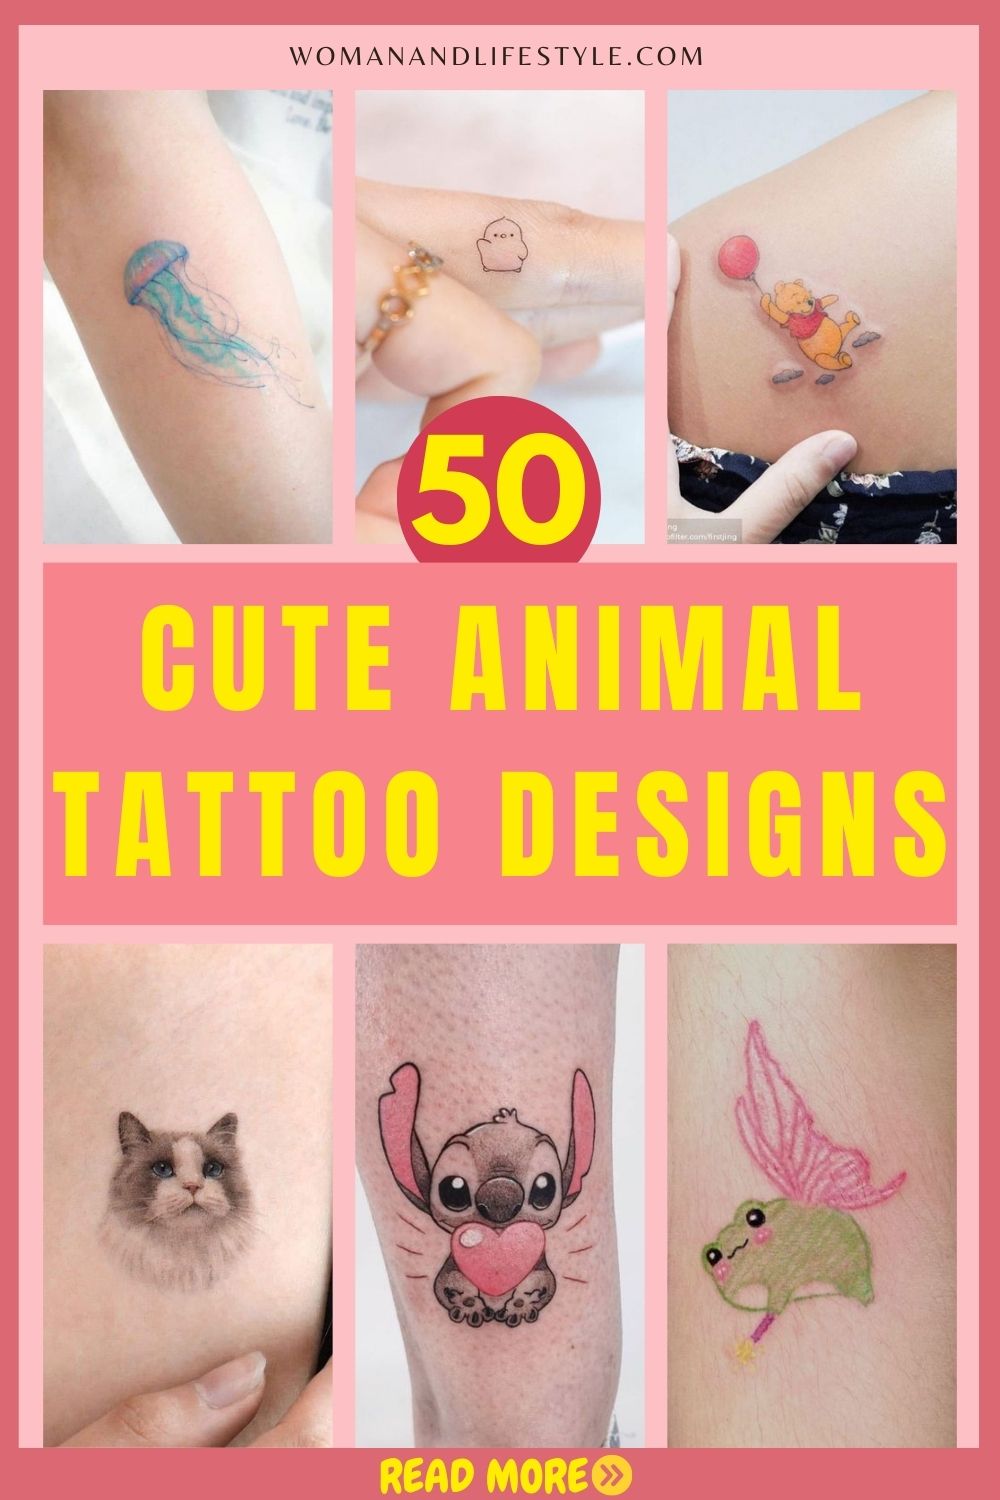 Cute-Animal-Tattoo-Designs-Pin